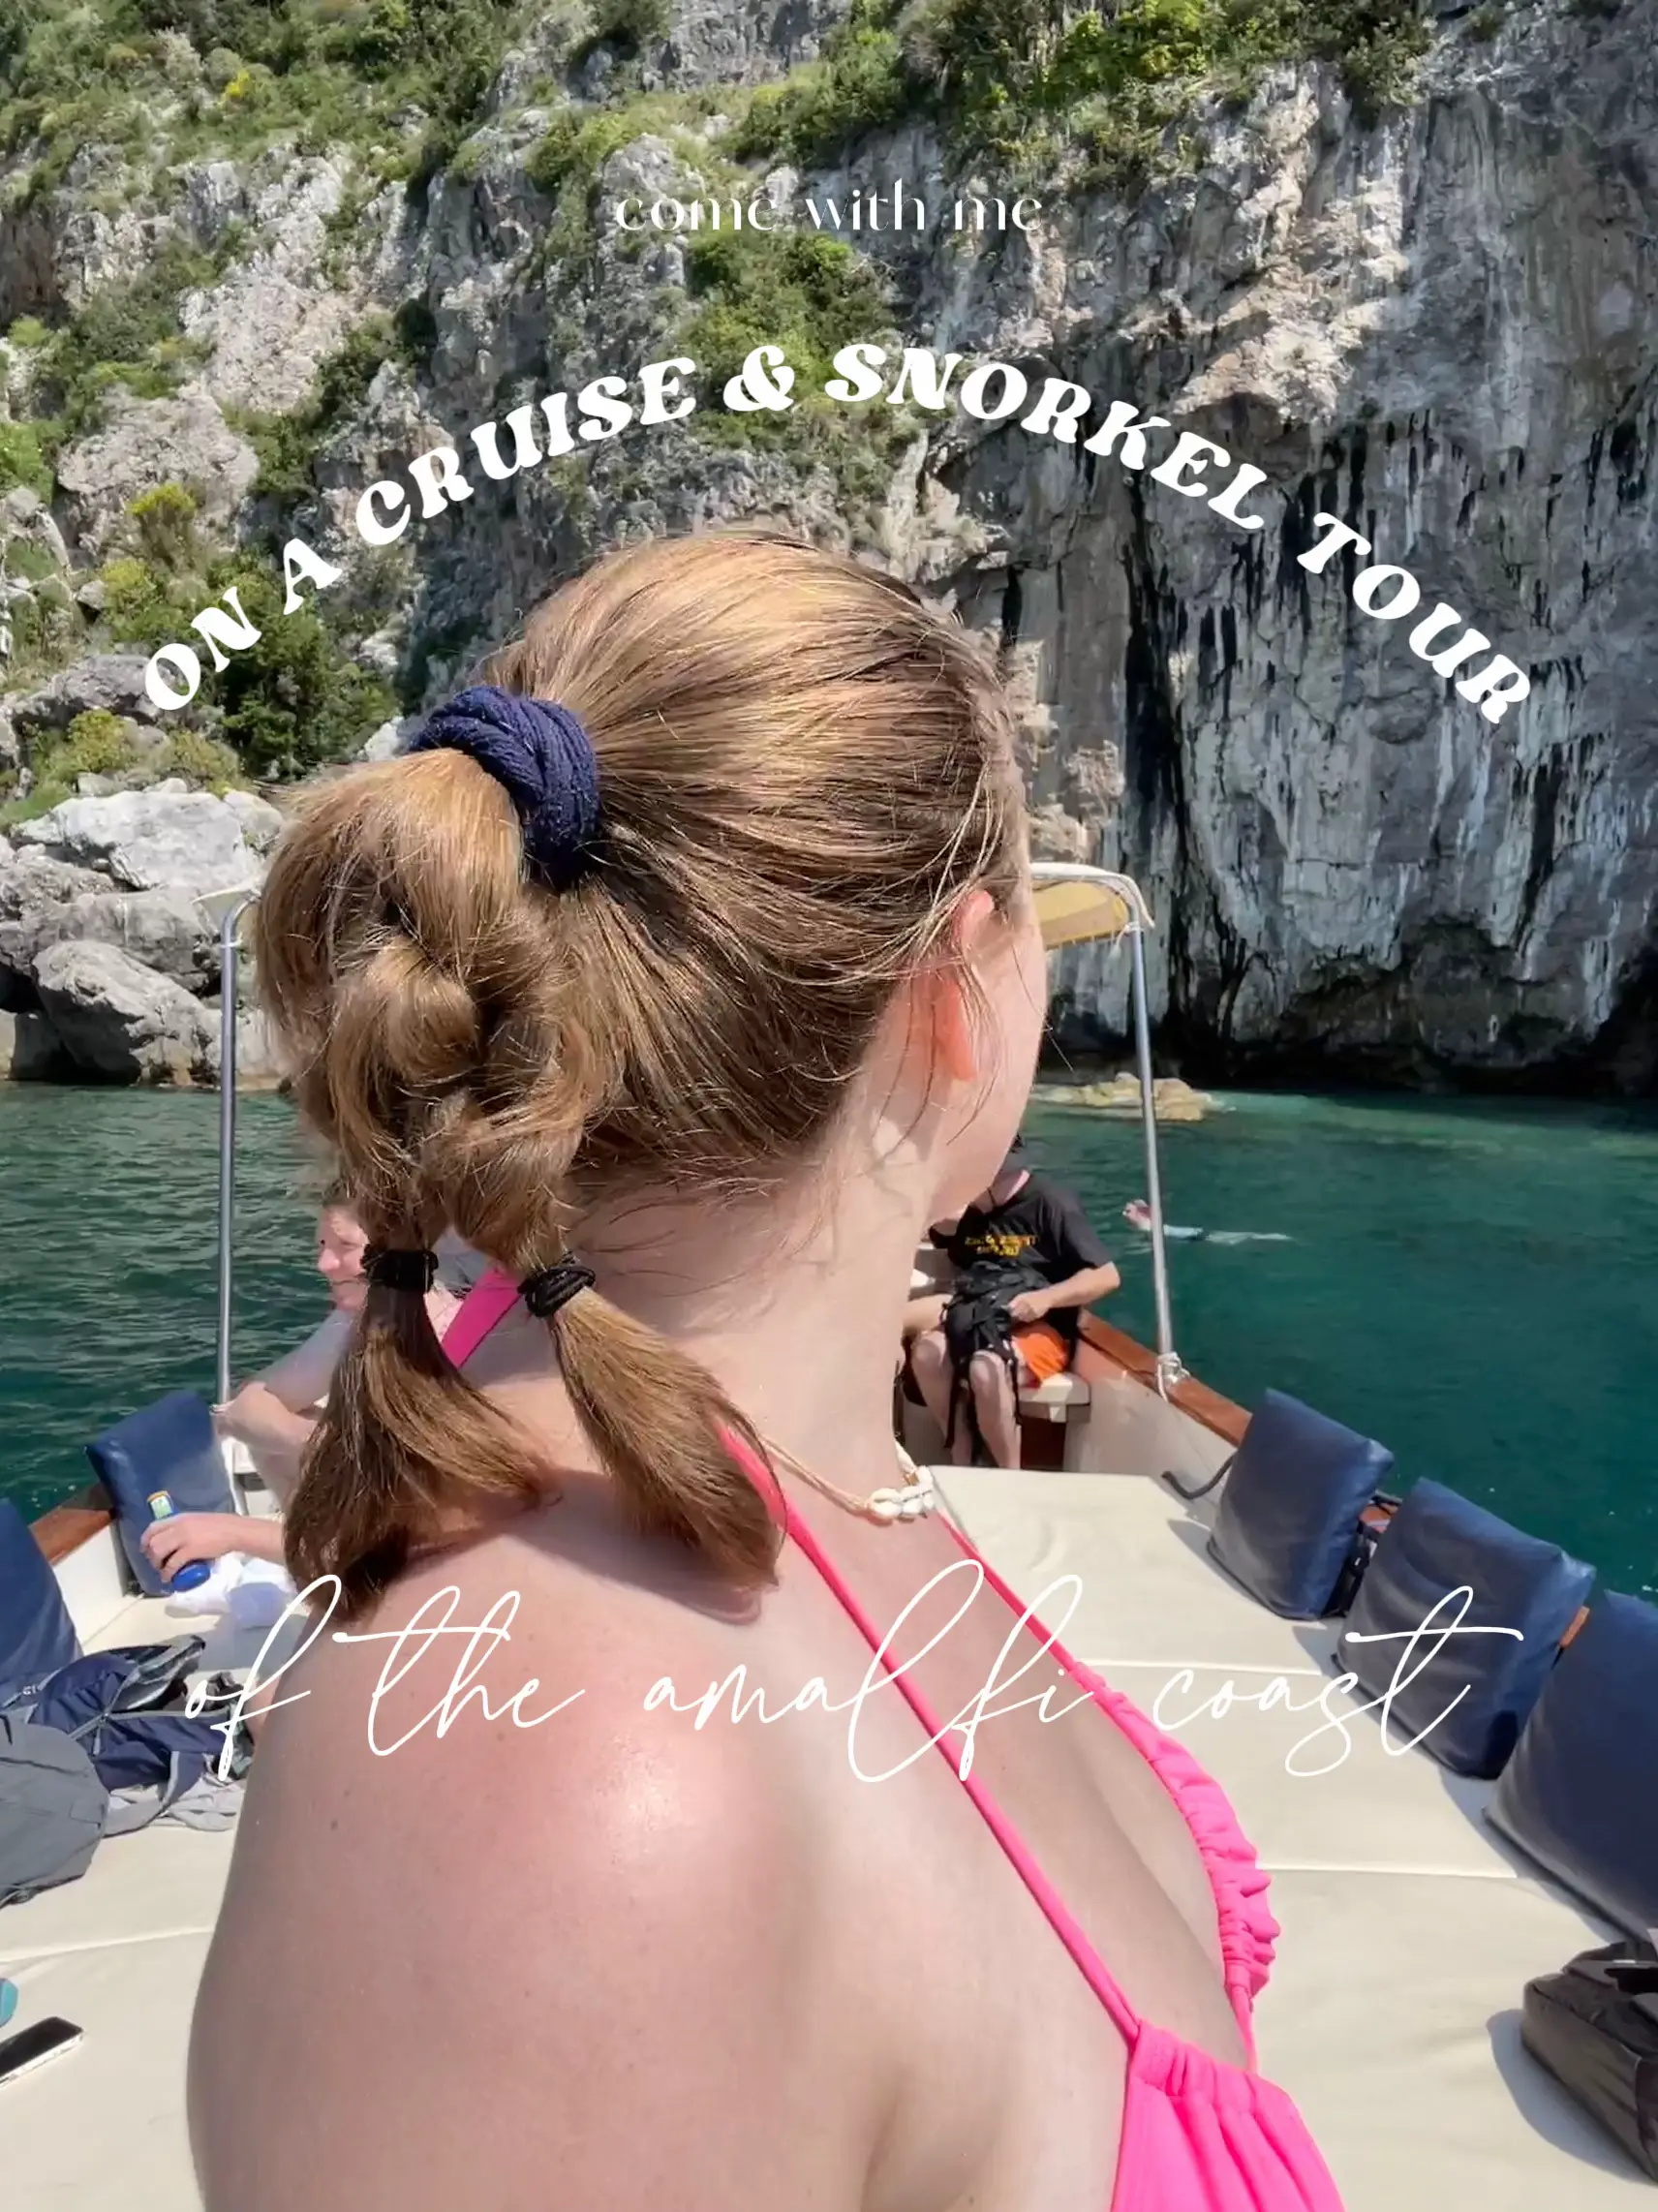 cruise & snorkel the amalfi coast with me 🩵🌊🇮🇹 's images